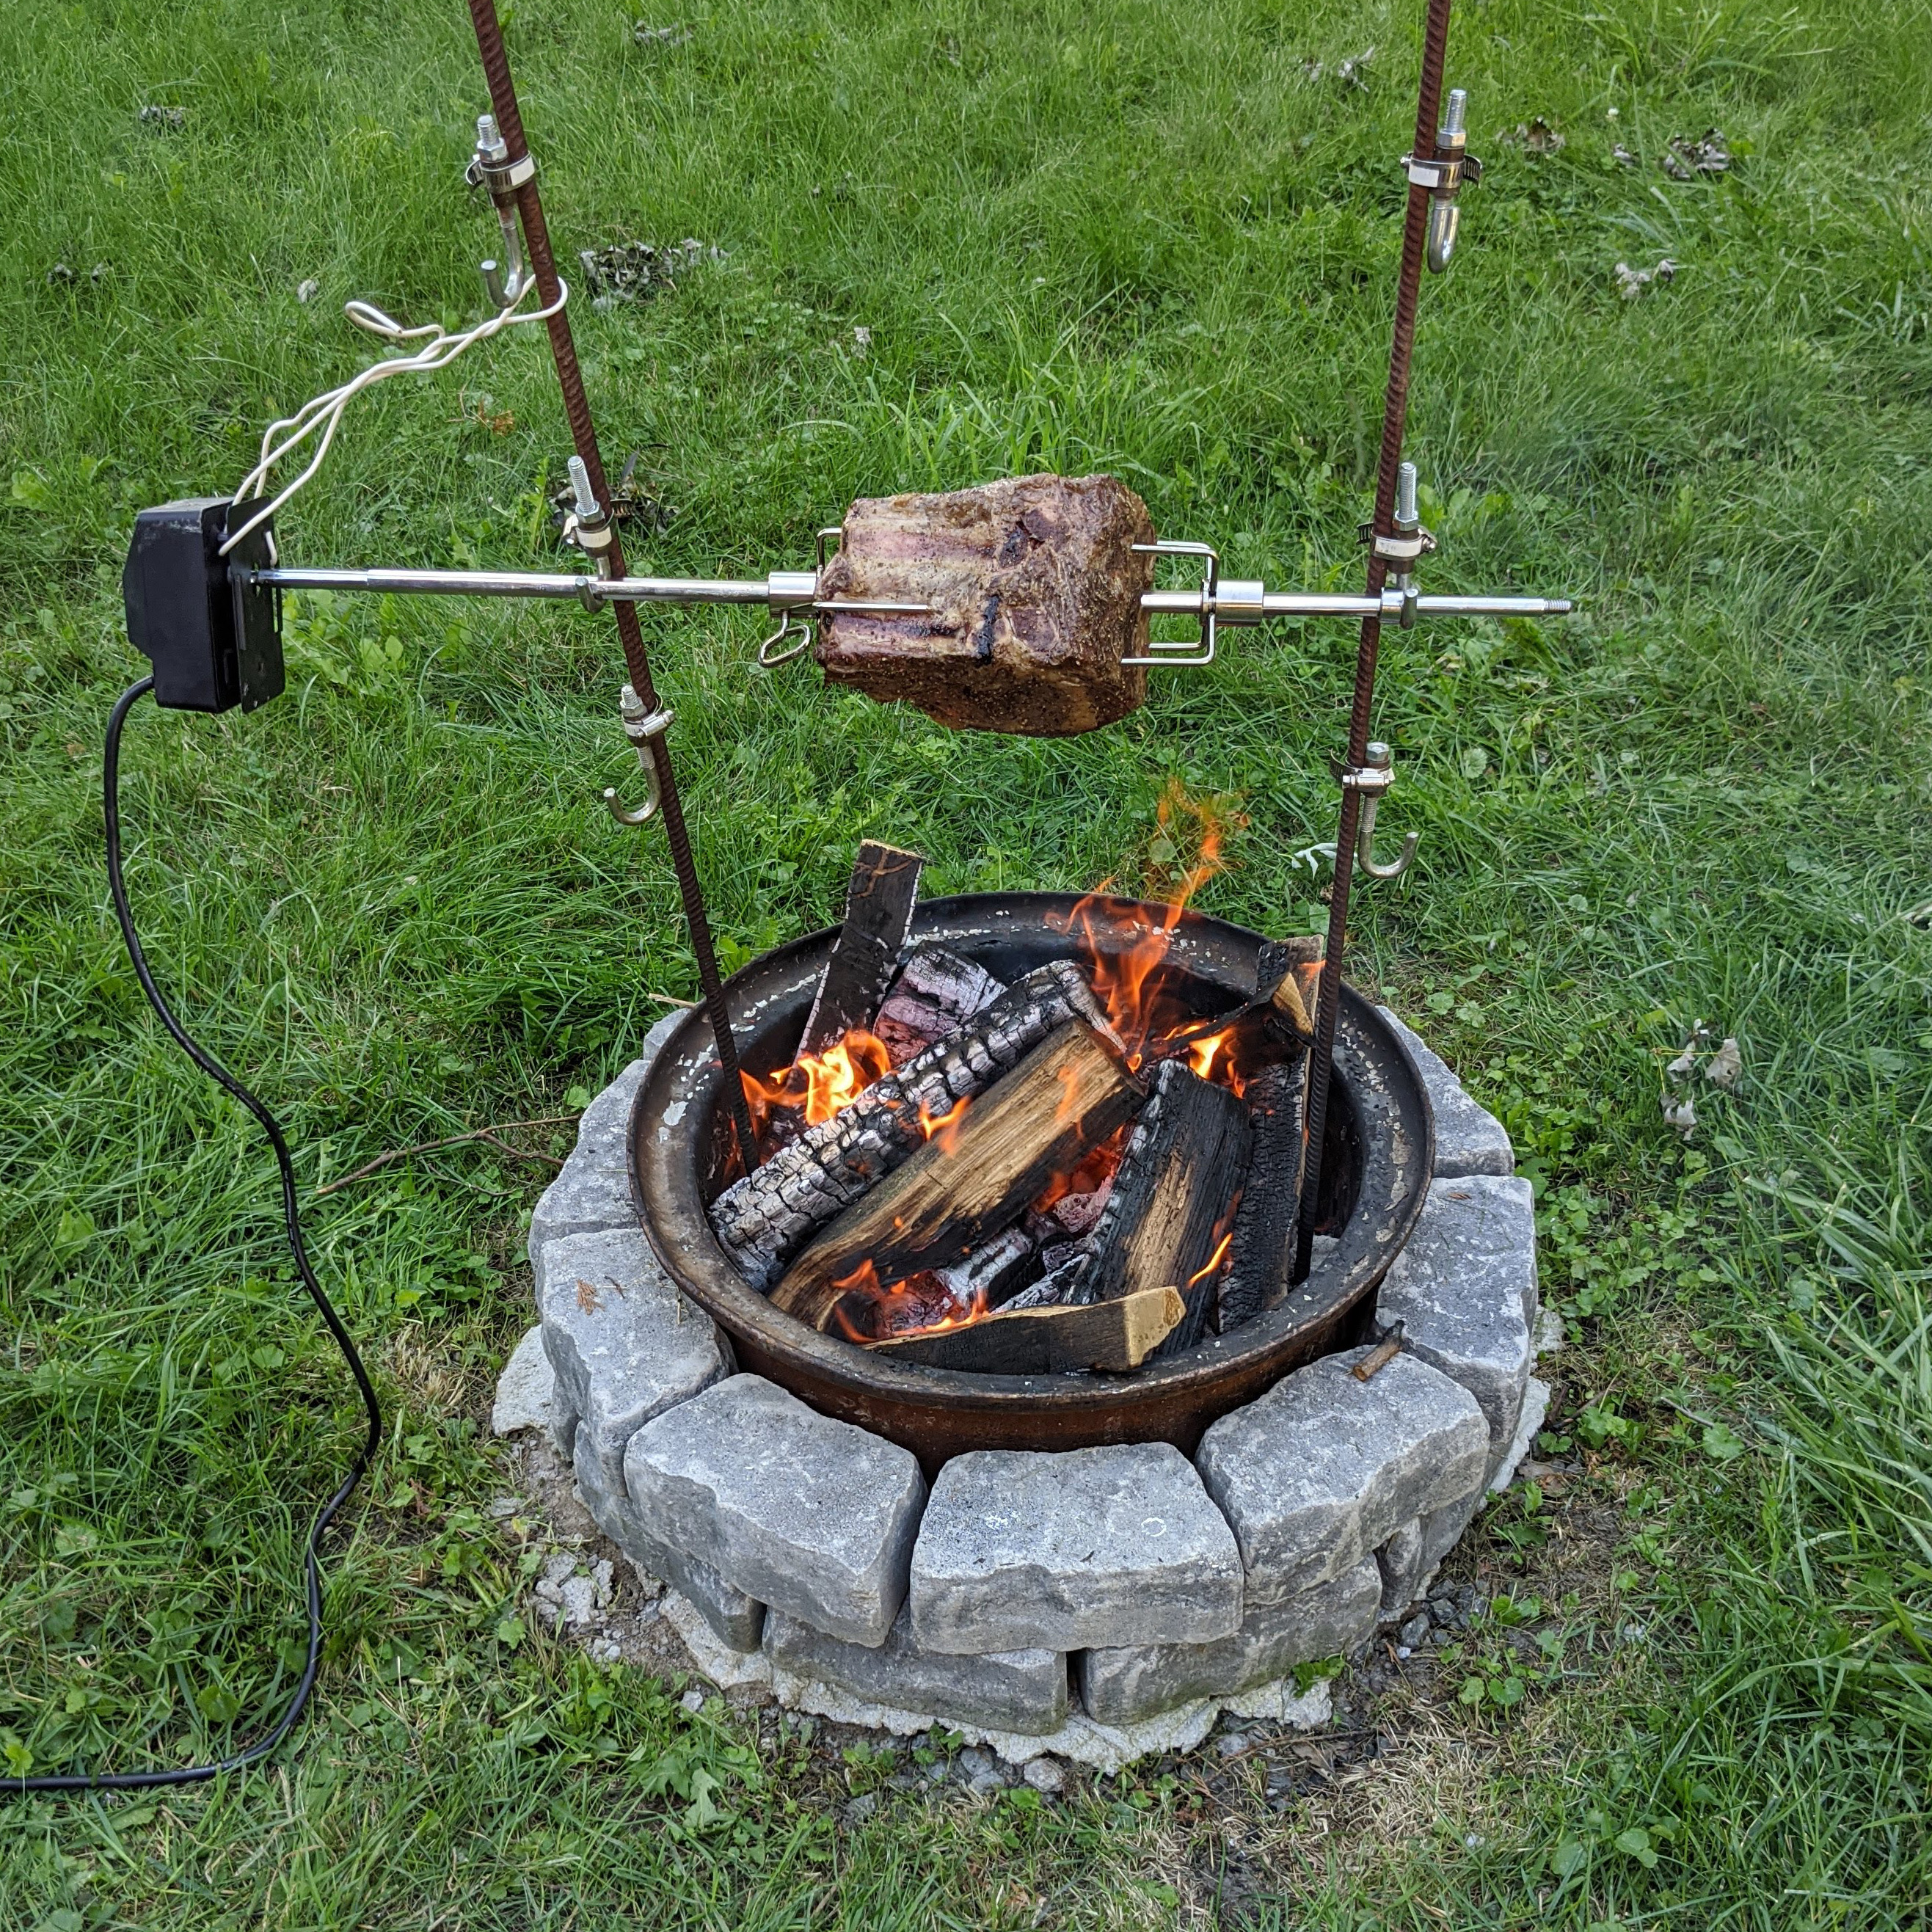 My redneck engineering firepit in action.